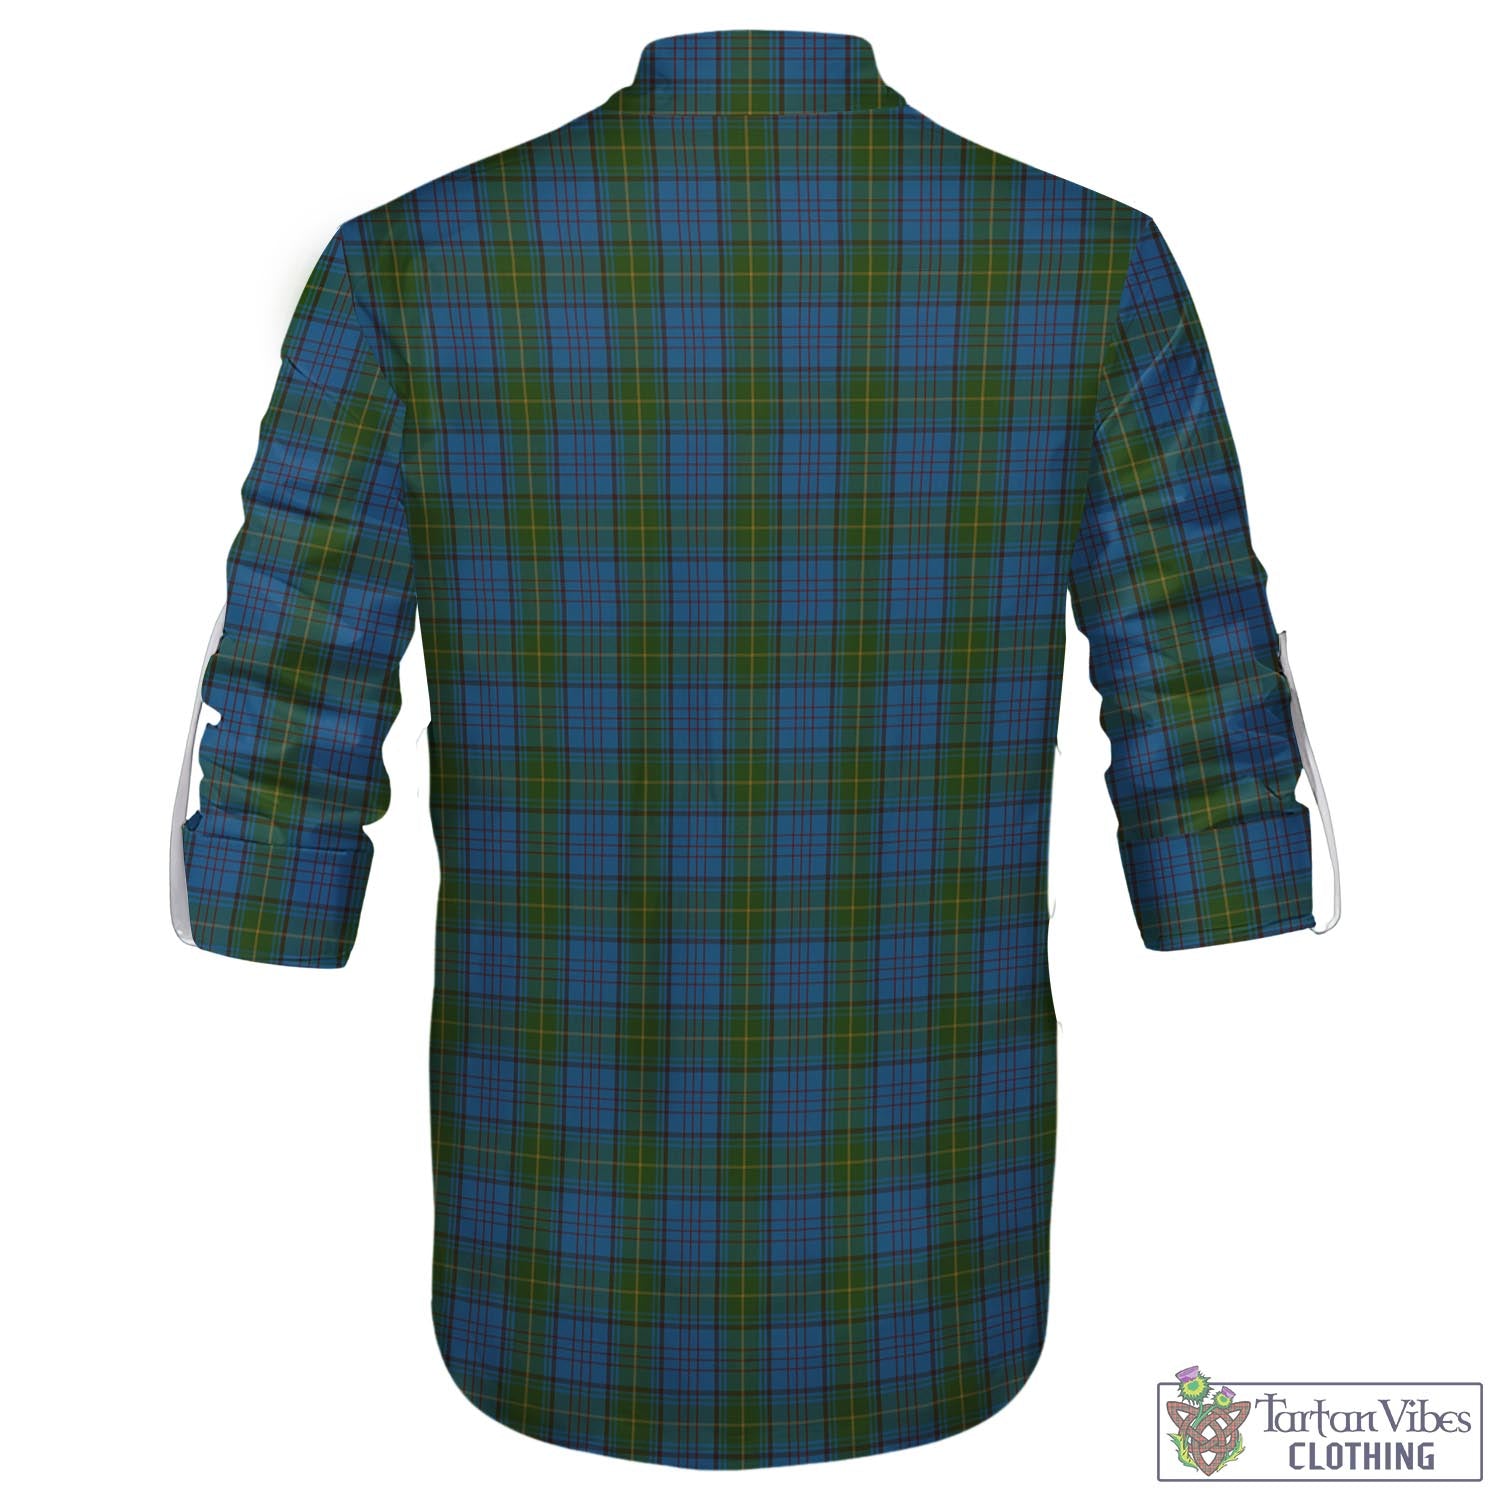 Tartan Vibes Clothing Donegal County Ireland Tartan Men's Scottish Traditional Jacobite Ghillie Kilt Shirt